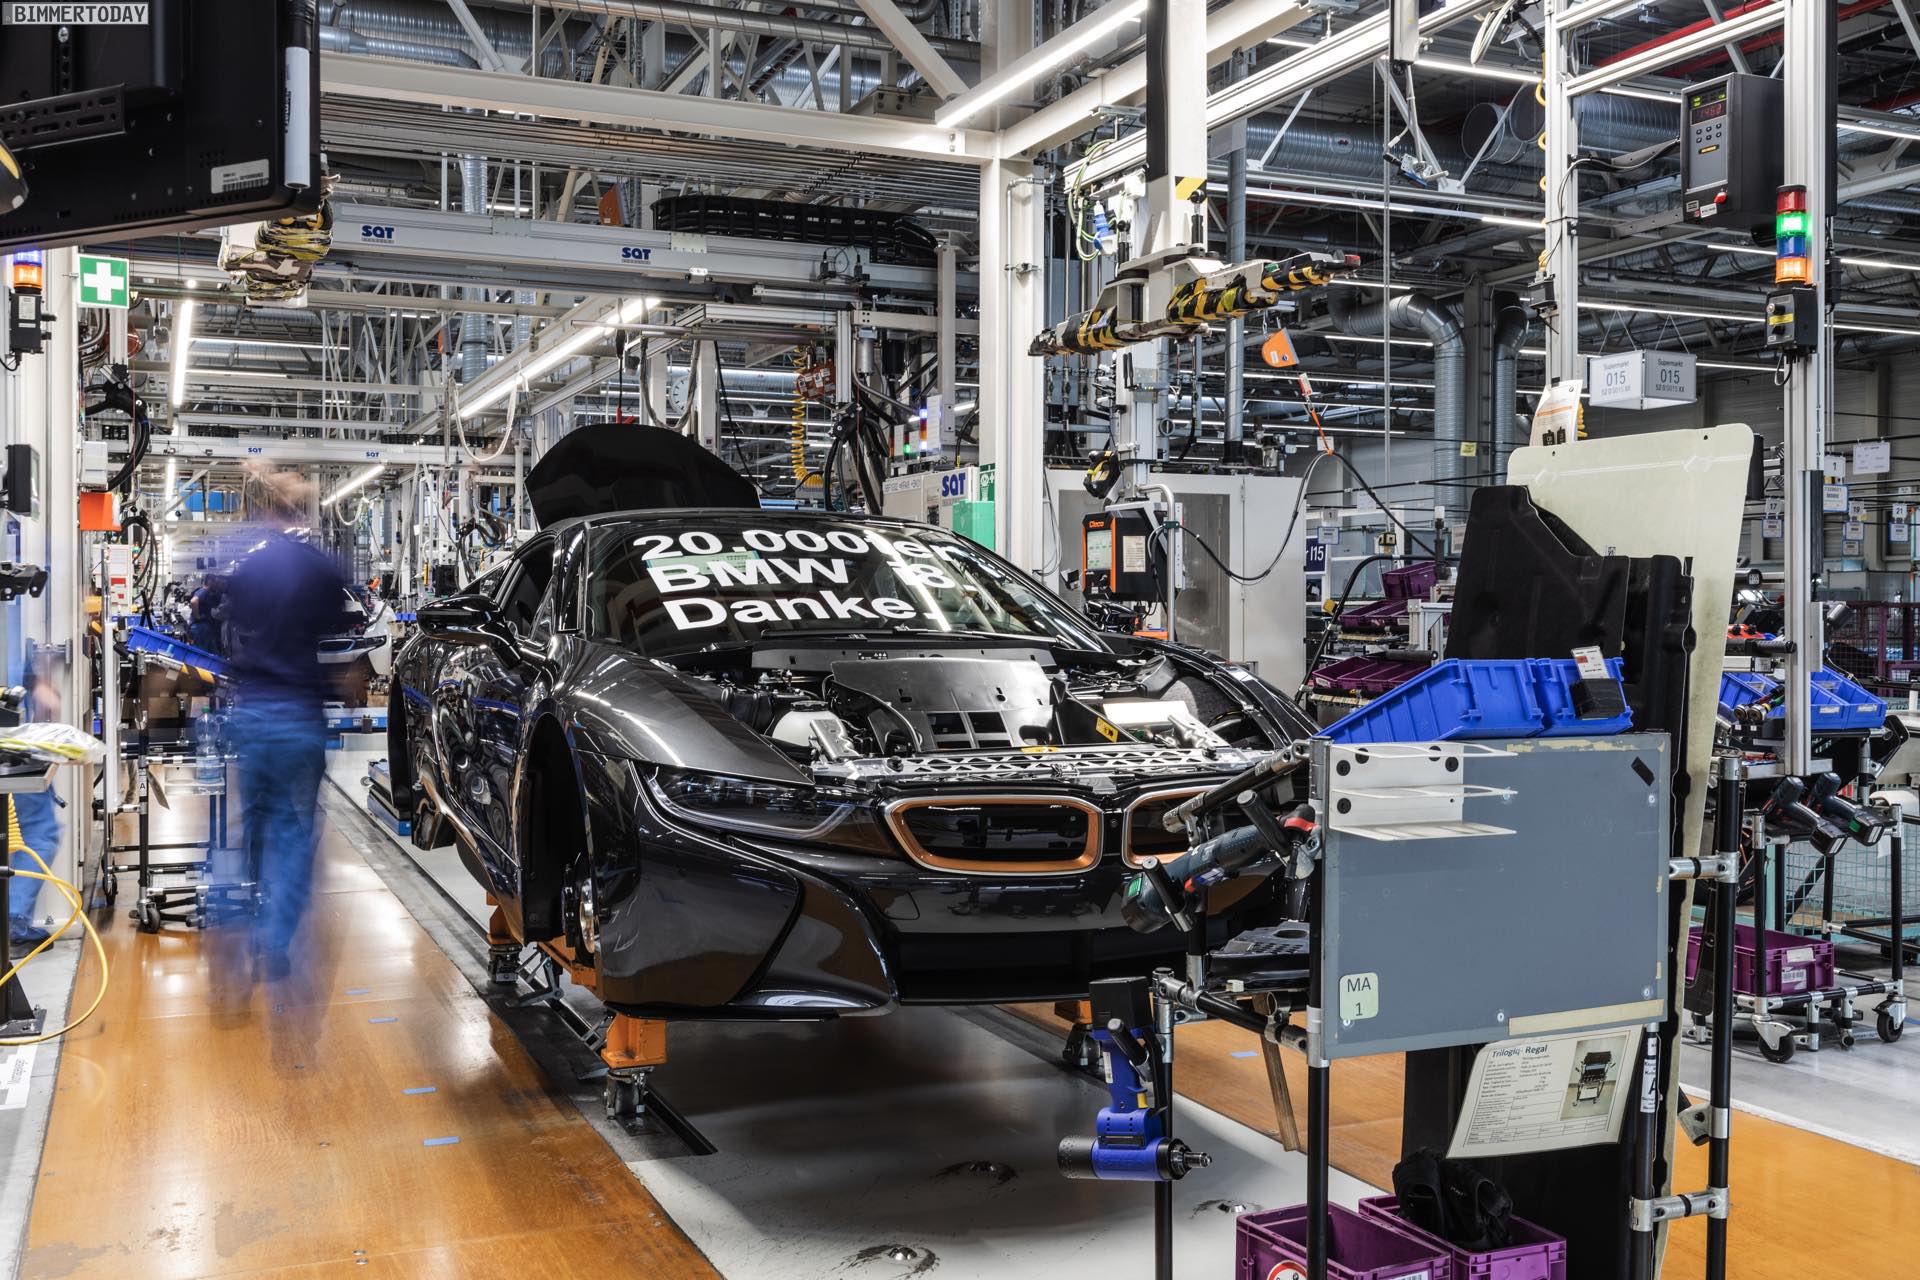 Android Auto trifft BMW iDrive: Ab Mitte 2020 optimal verknüpft